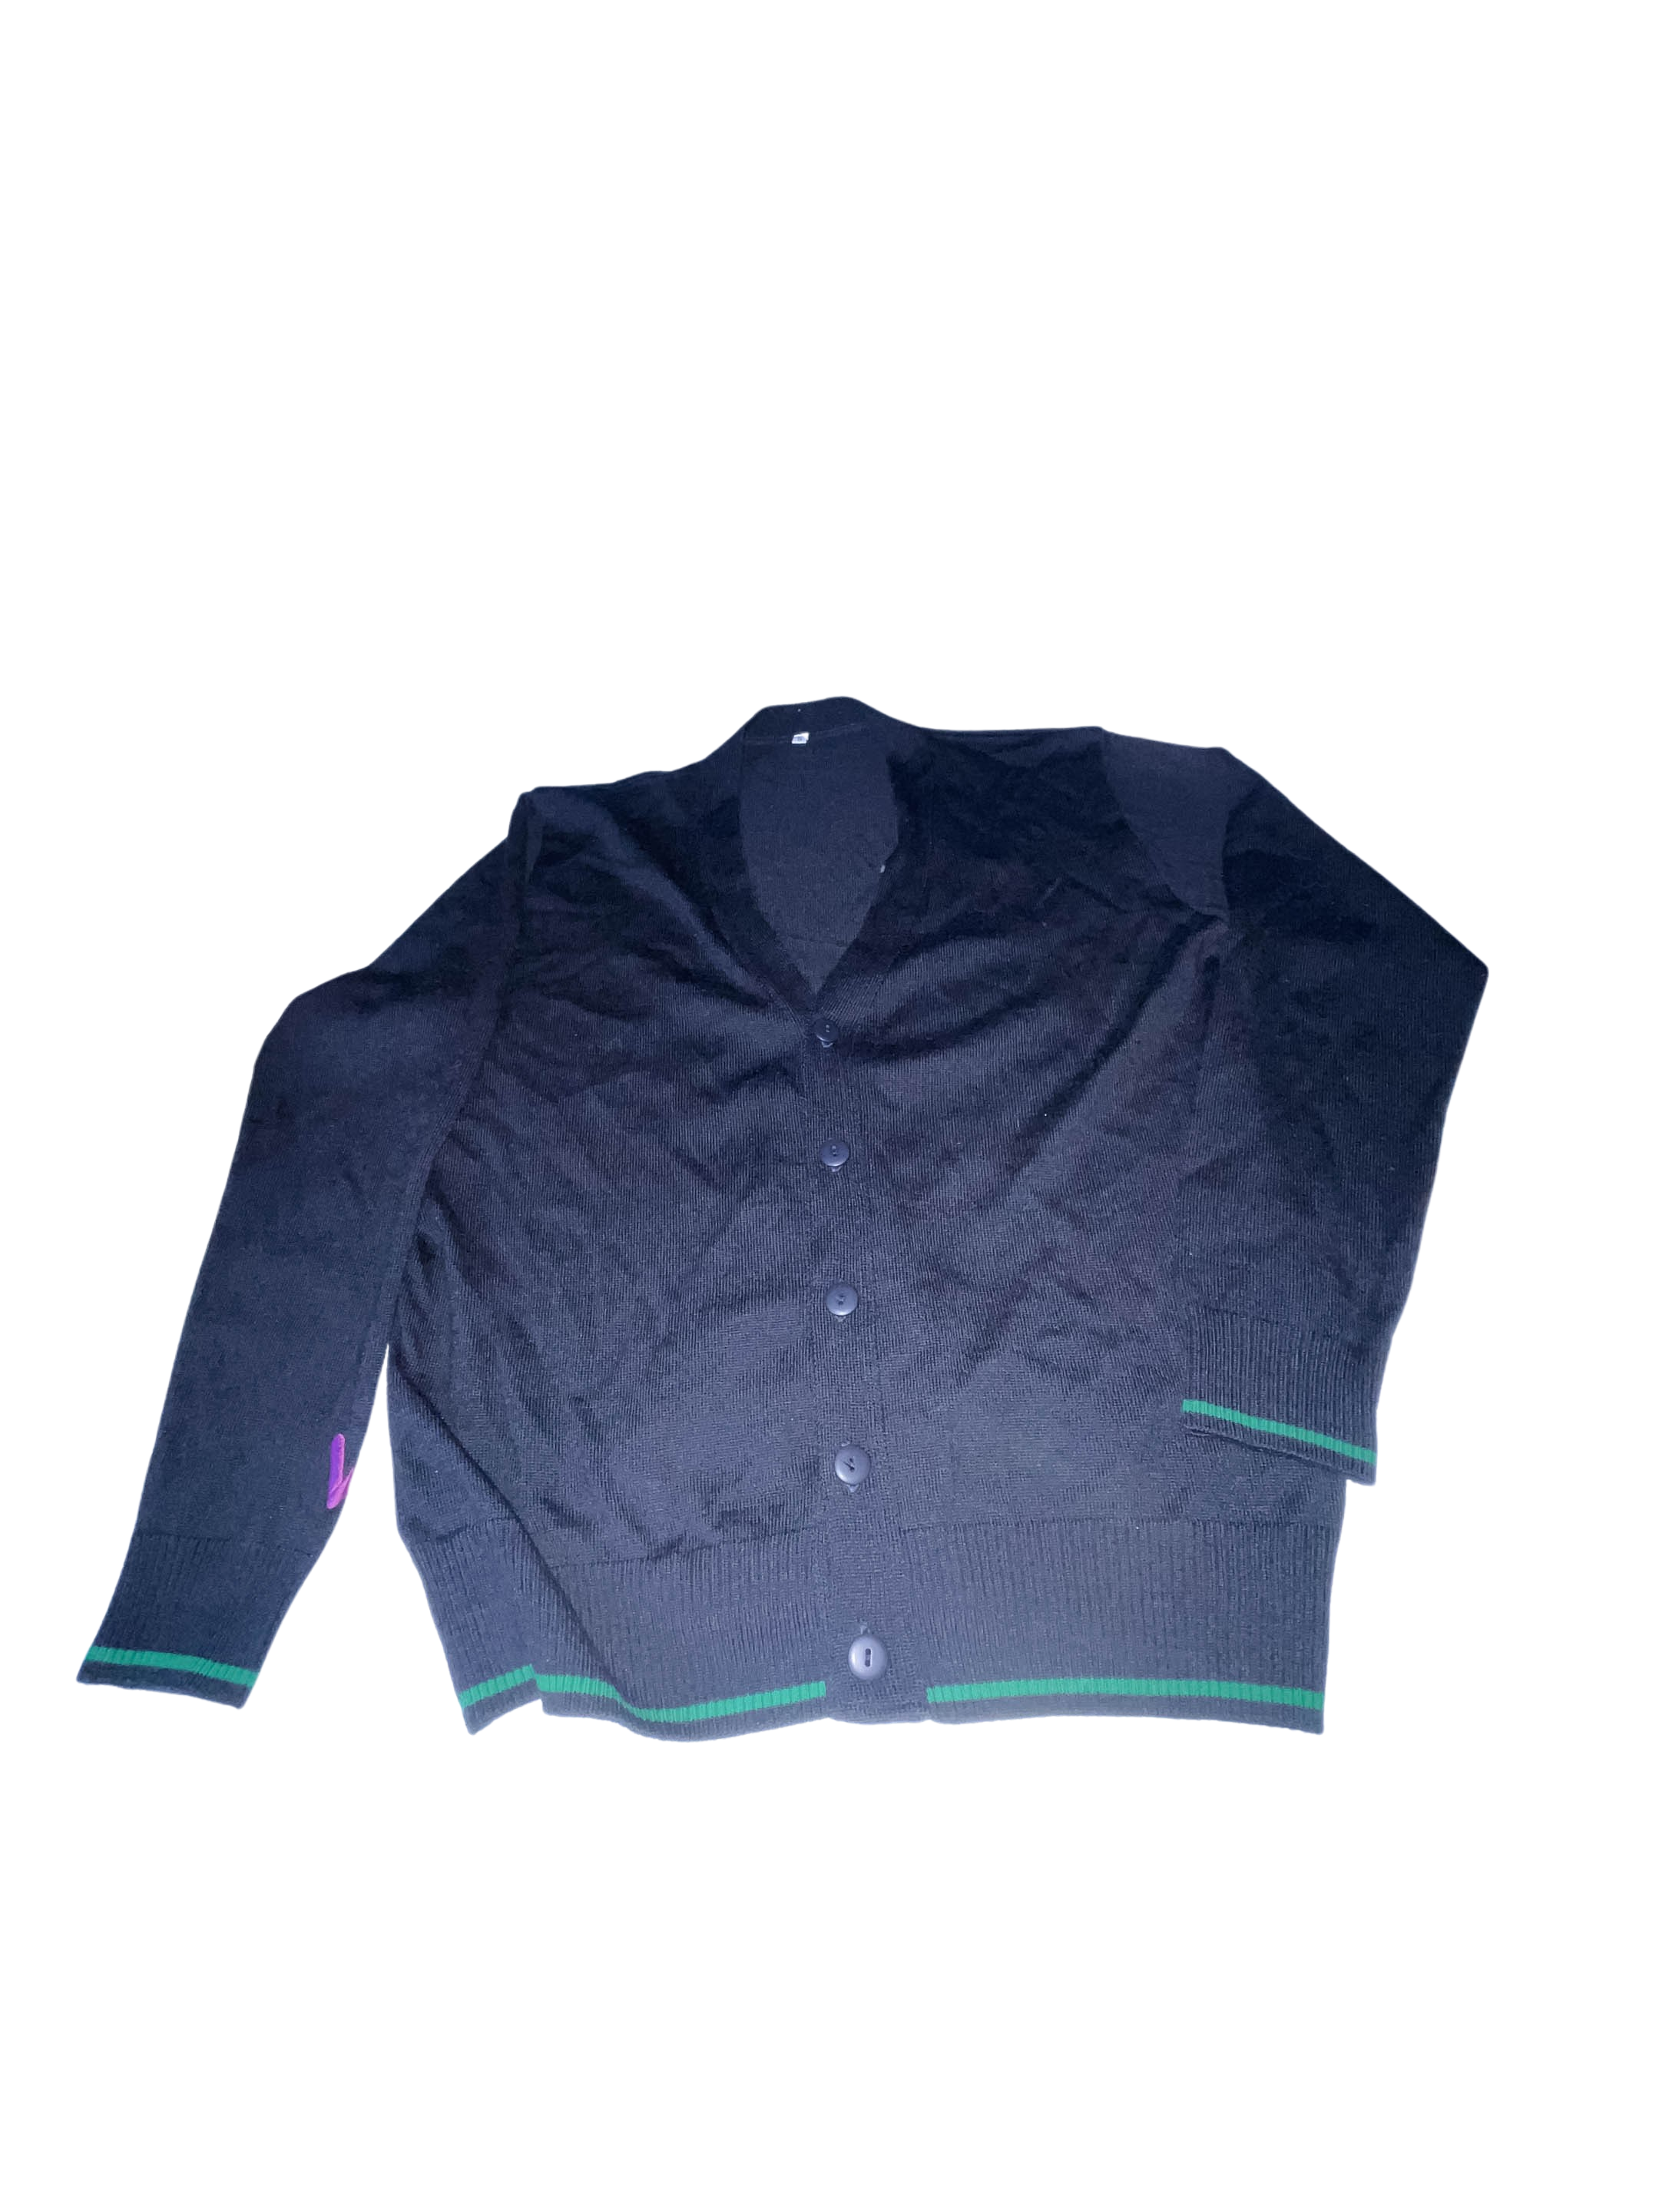 Vintage mens black small v-neck cashmere button up sweatshirt